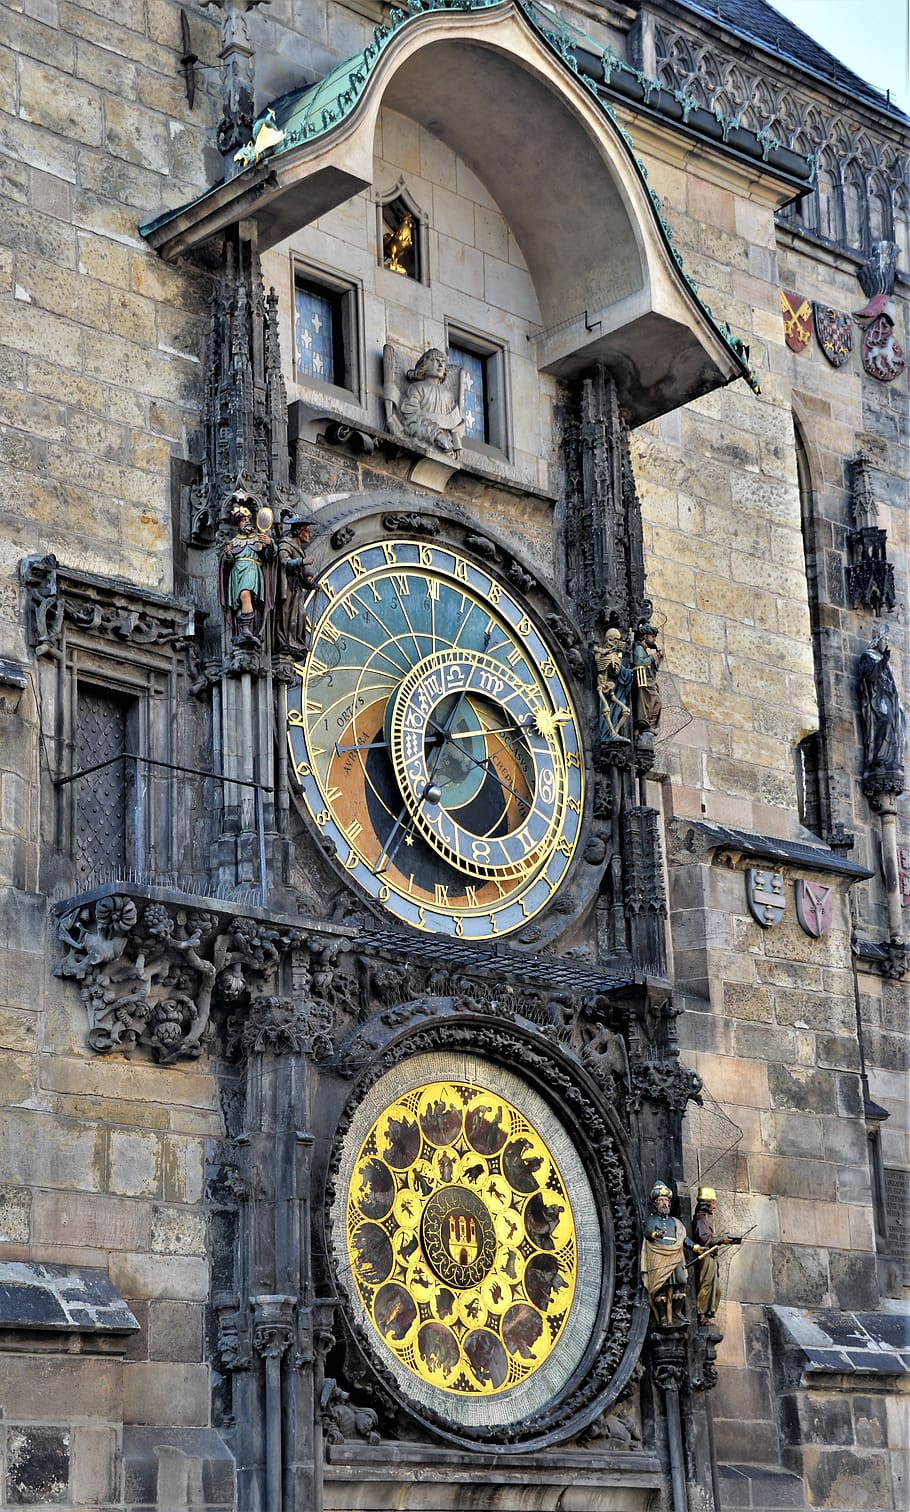 praha, jam astronomi, pusat bersejarah, historis, ibukota, republik ceko, pariwisata, bangunan eksterior, arsitektur, jam